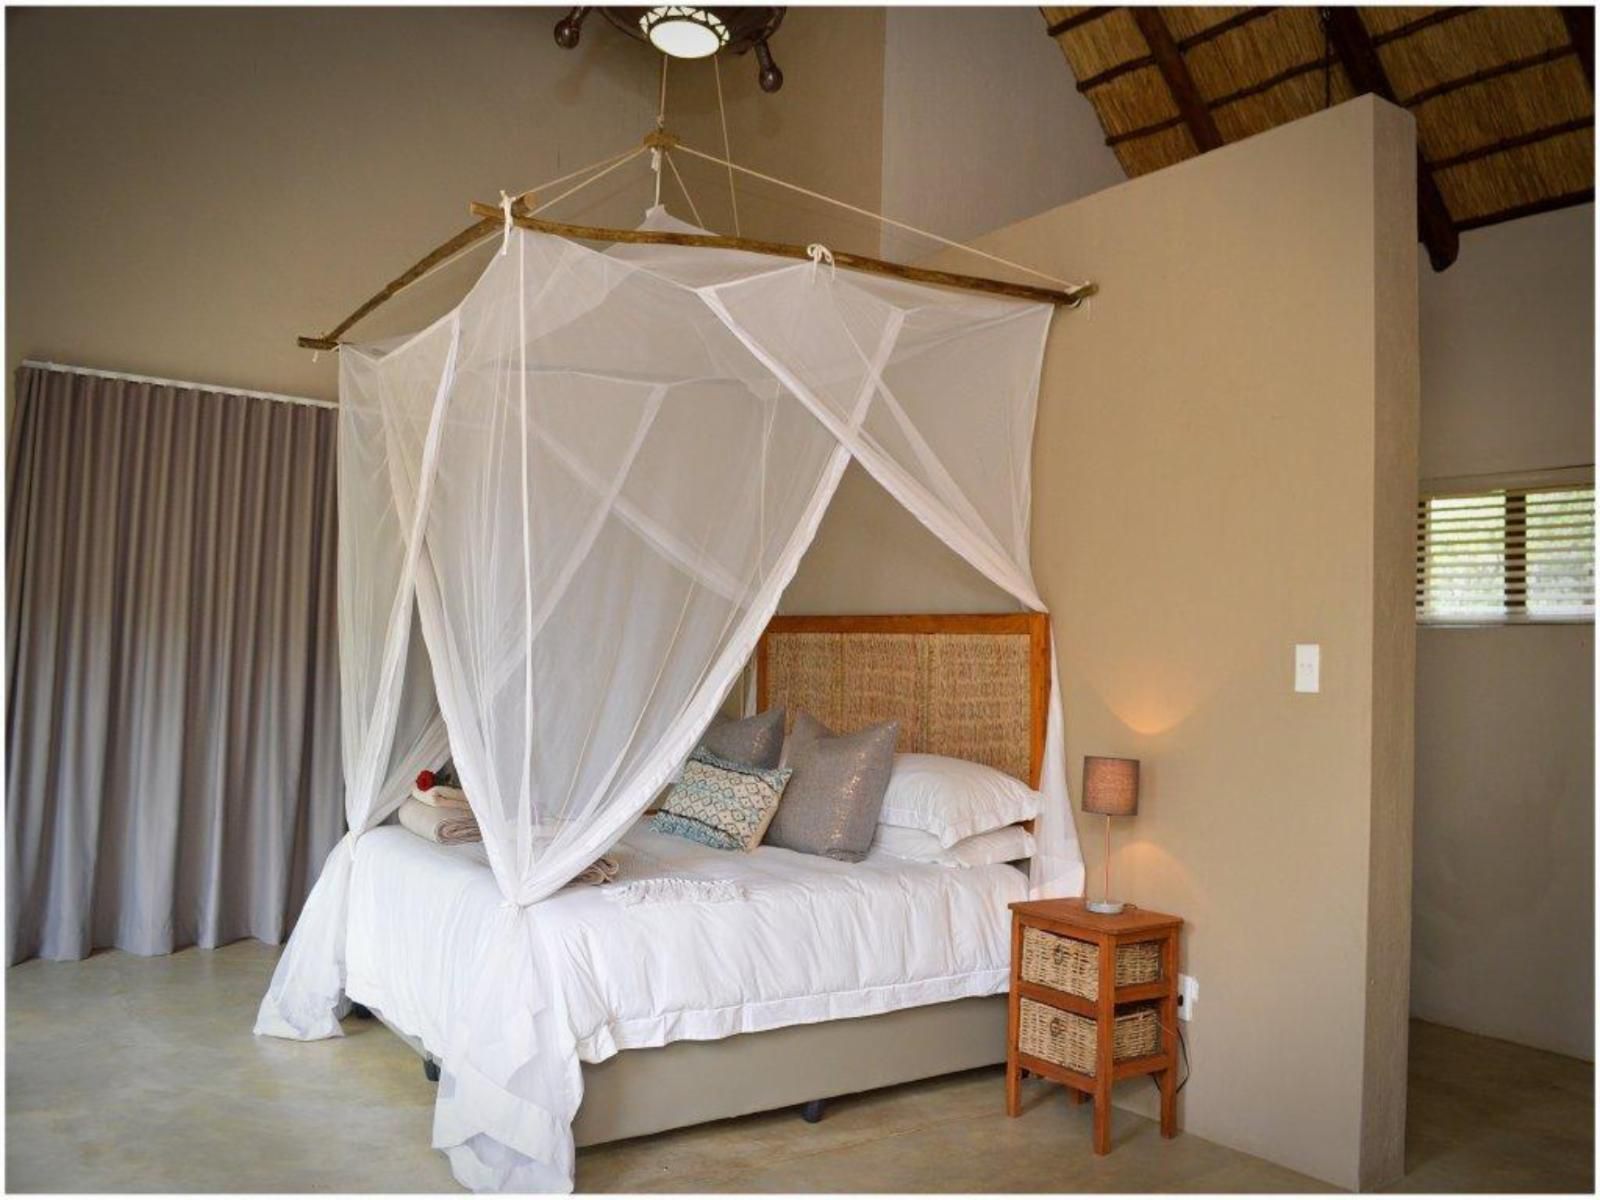 Klavati Game Lodge Hoedspruit Limpopo Province South Africa Bedroom